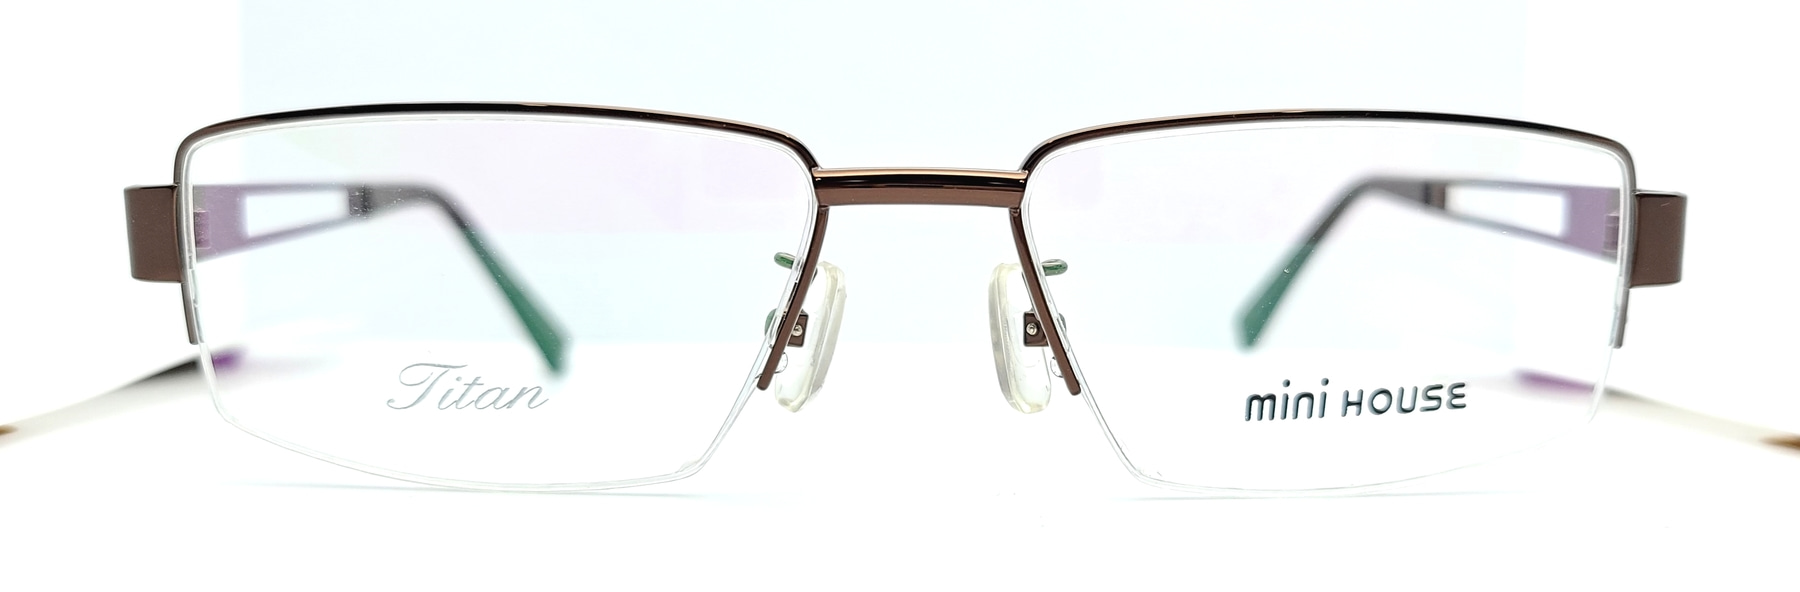 MINIHOUSE M-1045, Korean glasses, sunglasses, eyeglasses, glasses